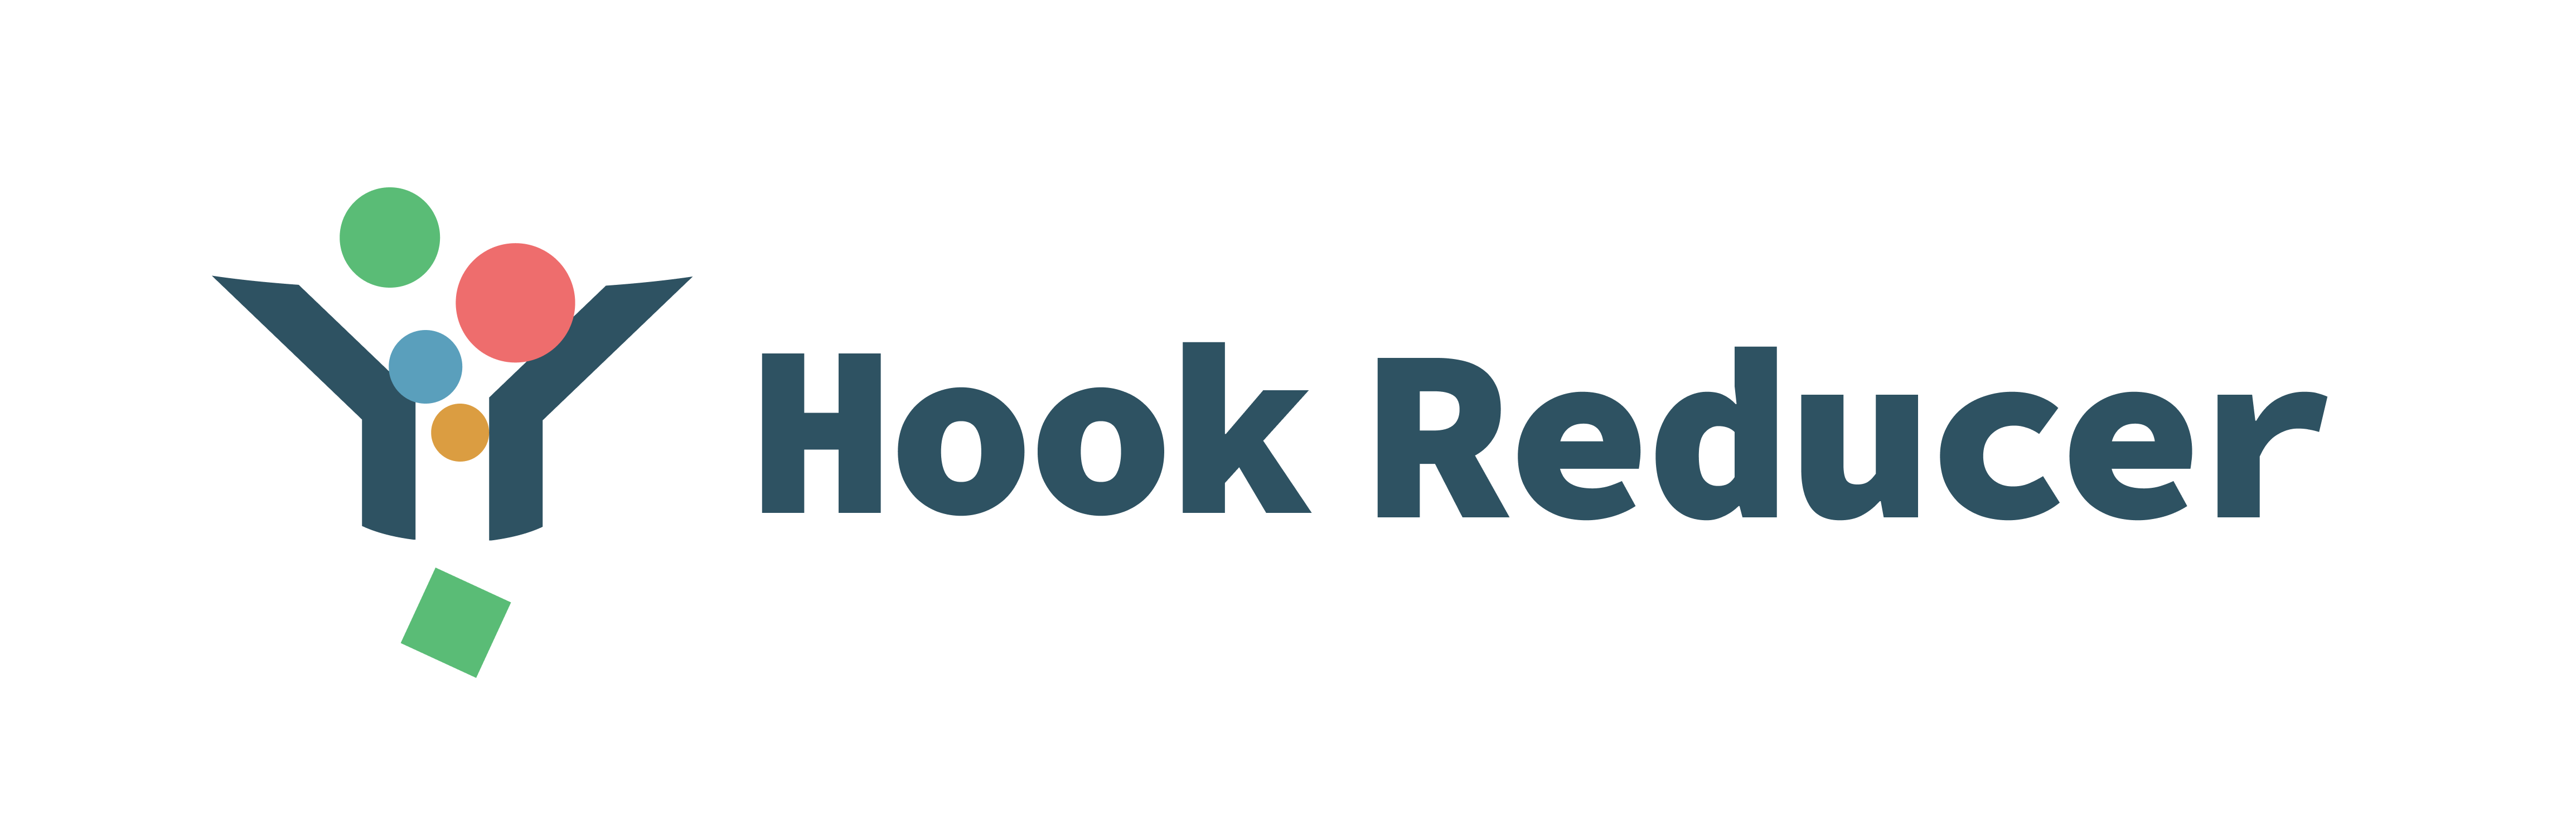 Hook Reducer Logo